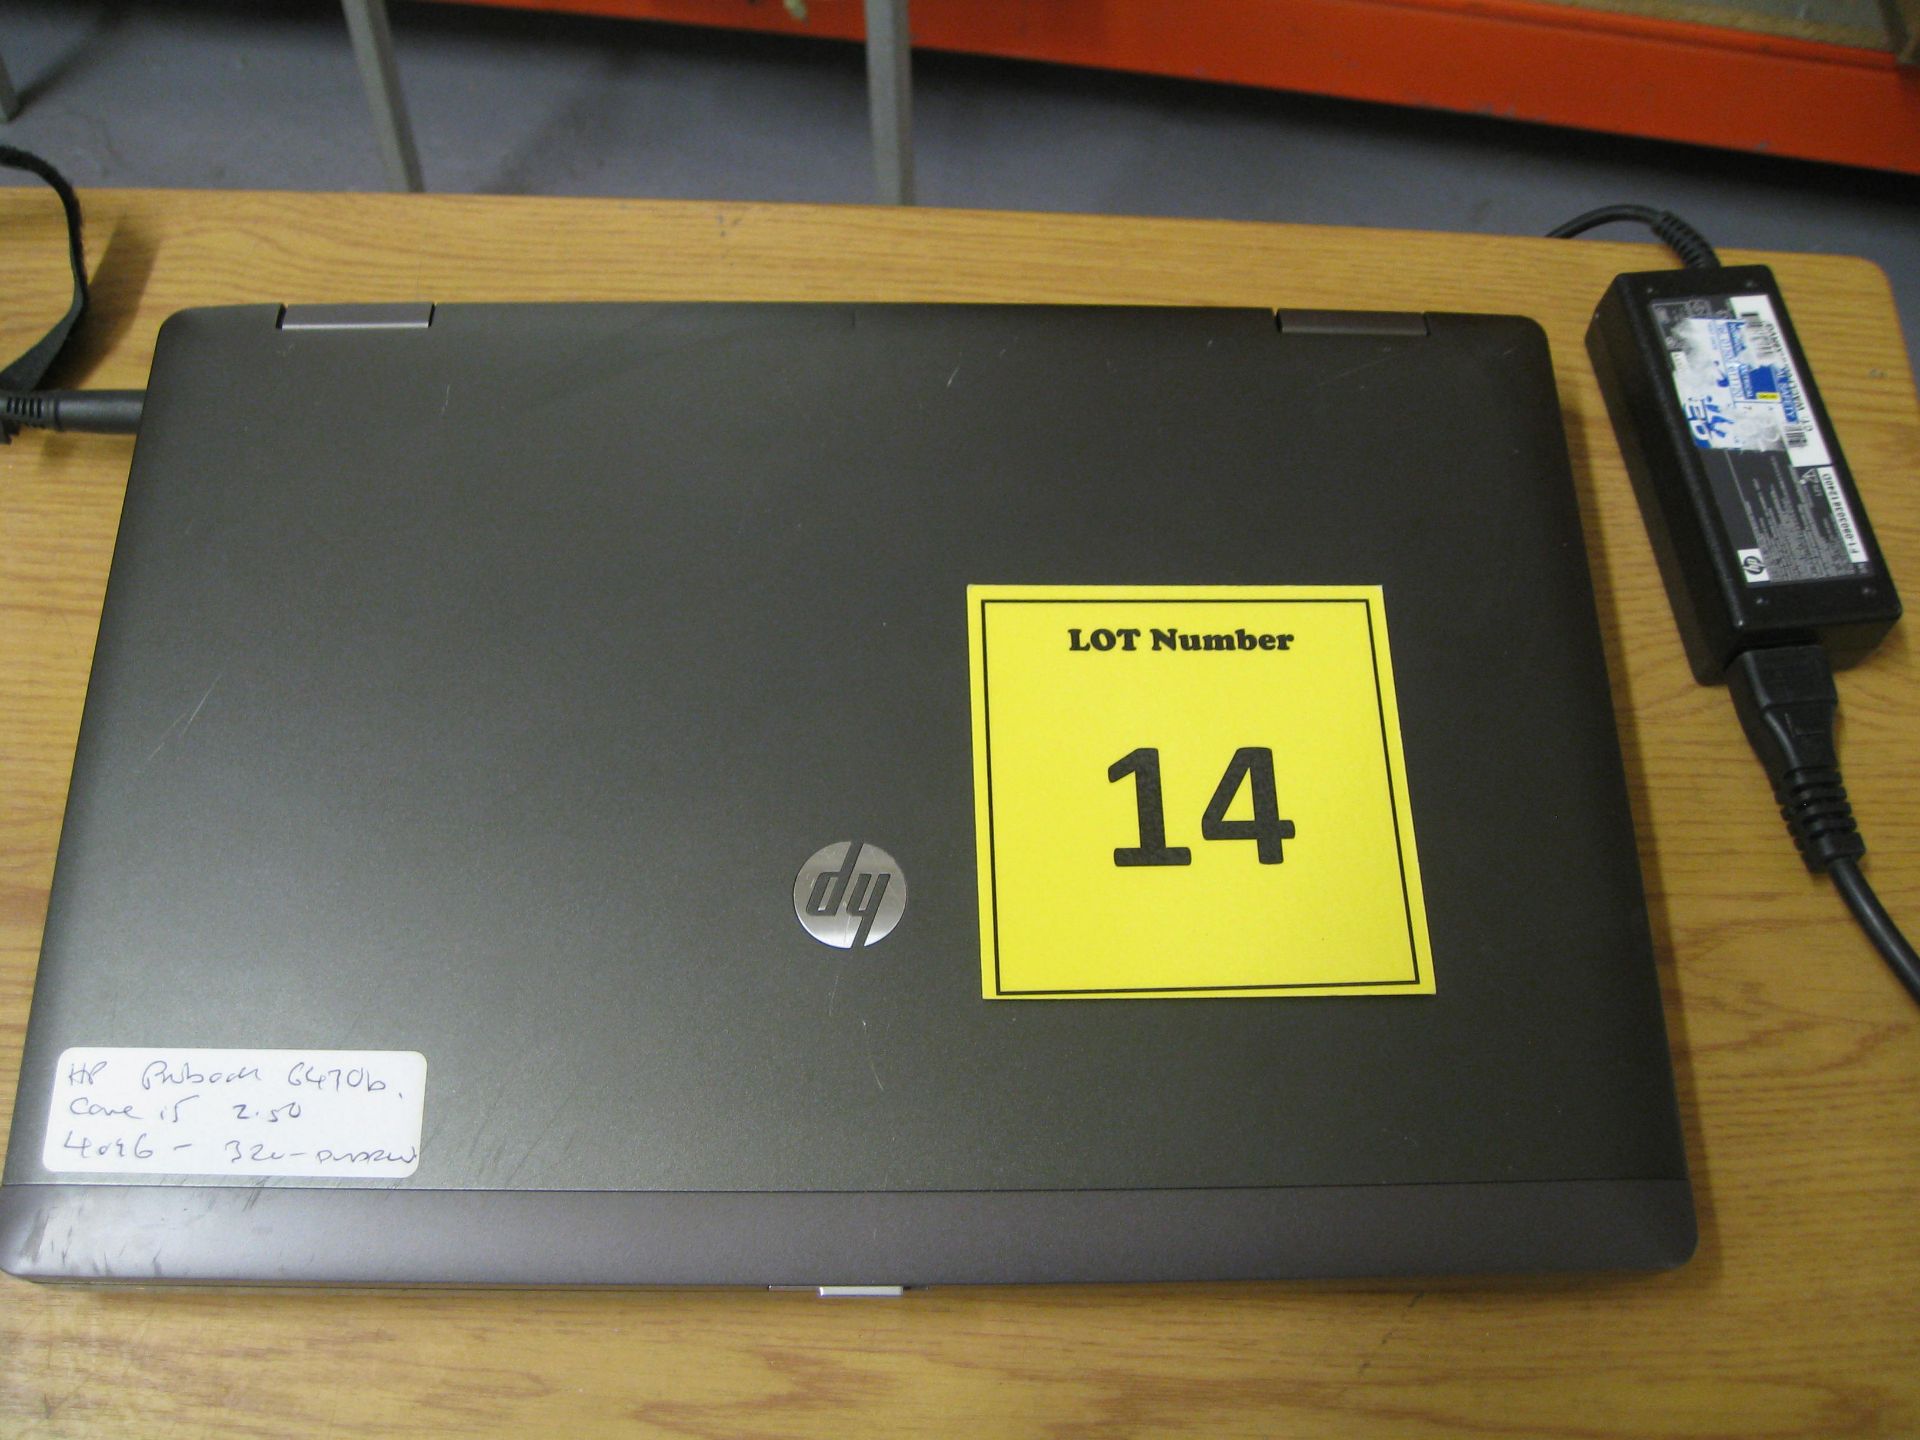 HP Probook 6470b Laptop, C-i5/2.50GHZ, 4GB RAM/320 GB HDD, dvdrw, psu - Win 7 Pro COA - Image 3 of 3